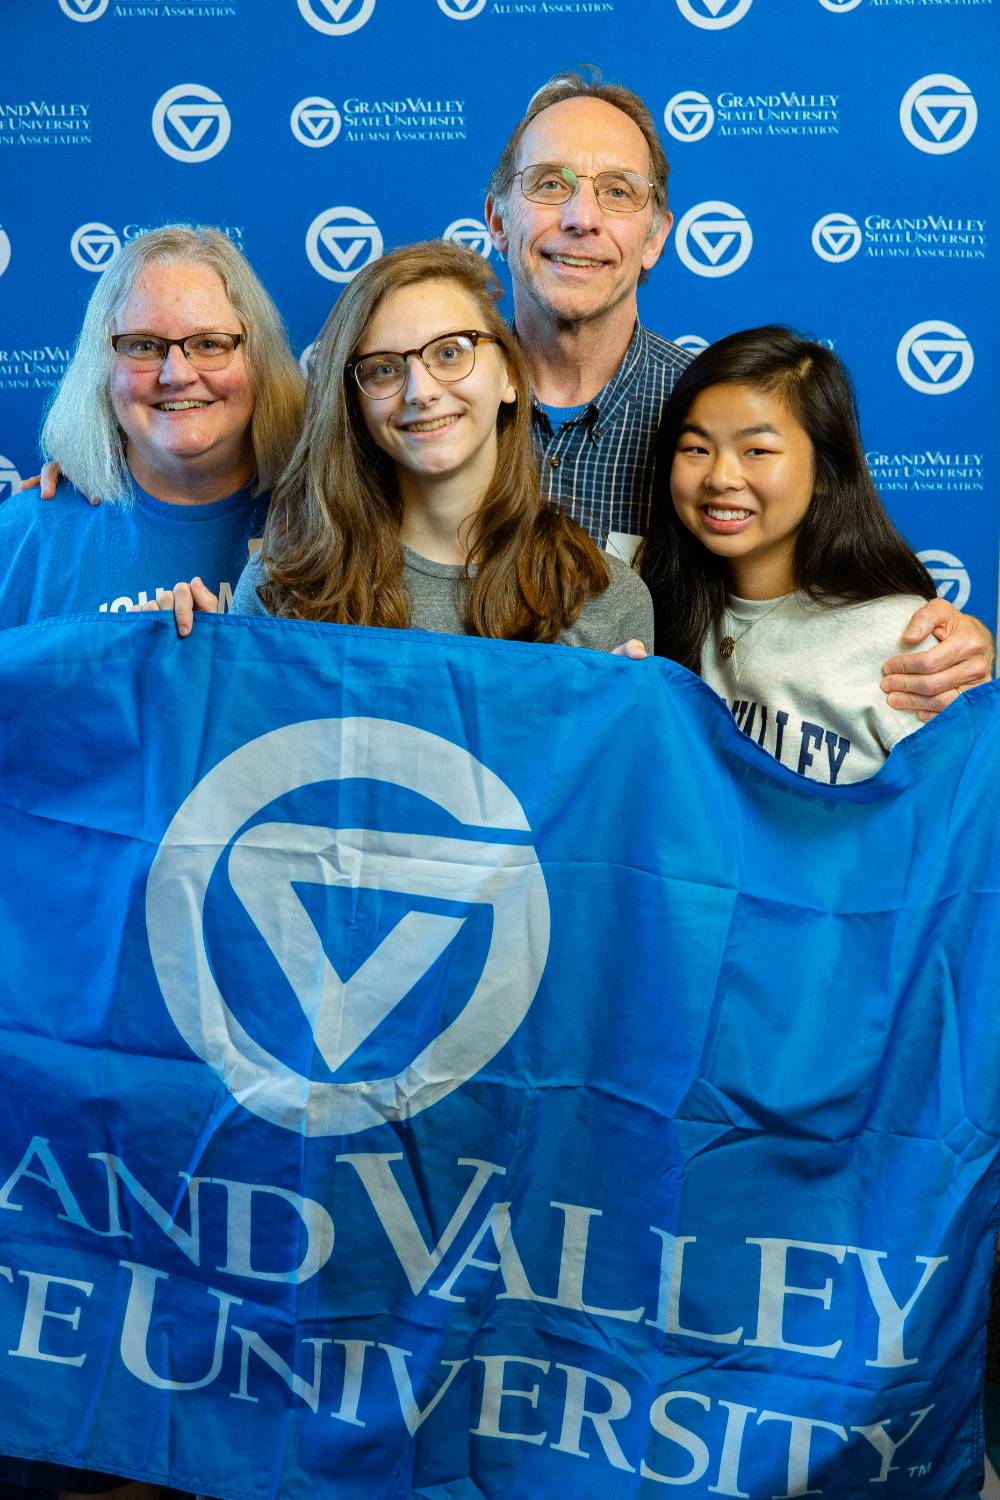 A family photo of alumni holding the GV flag